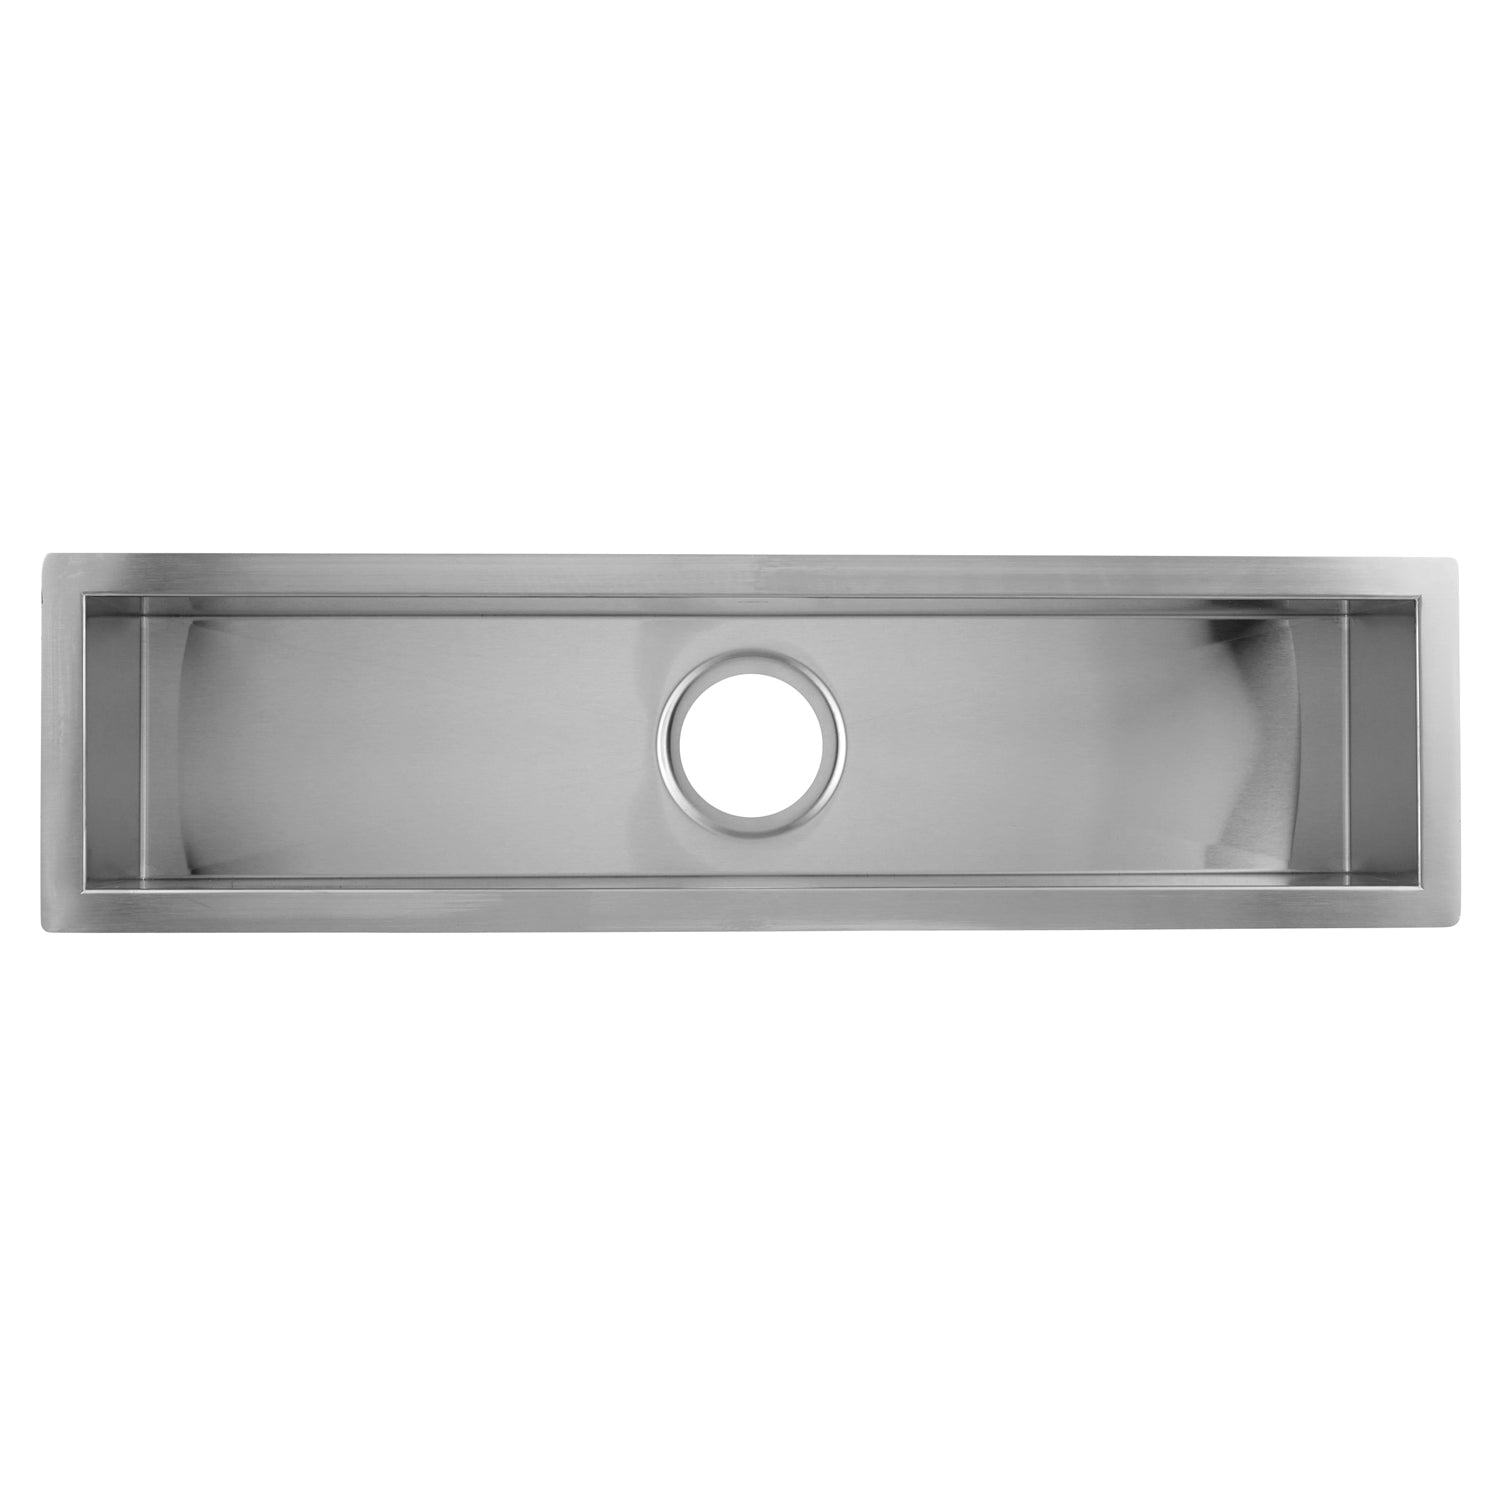 DAX Handmade Undermount Bar Sink, 16 Gauge Stainless Steel, Brushed Finish, 32 x 8-1/2 x 6 Inches (DAX-SQ-3285)